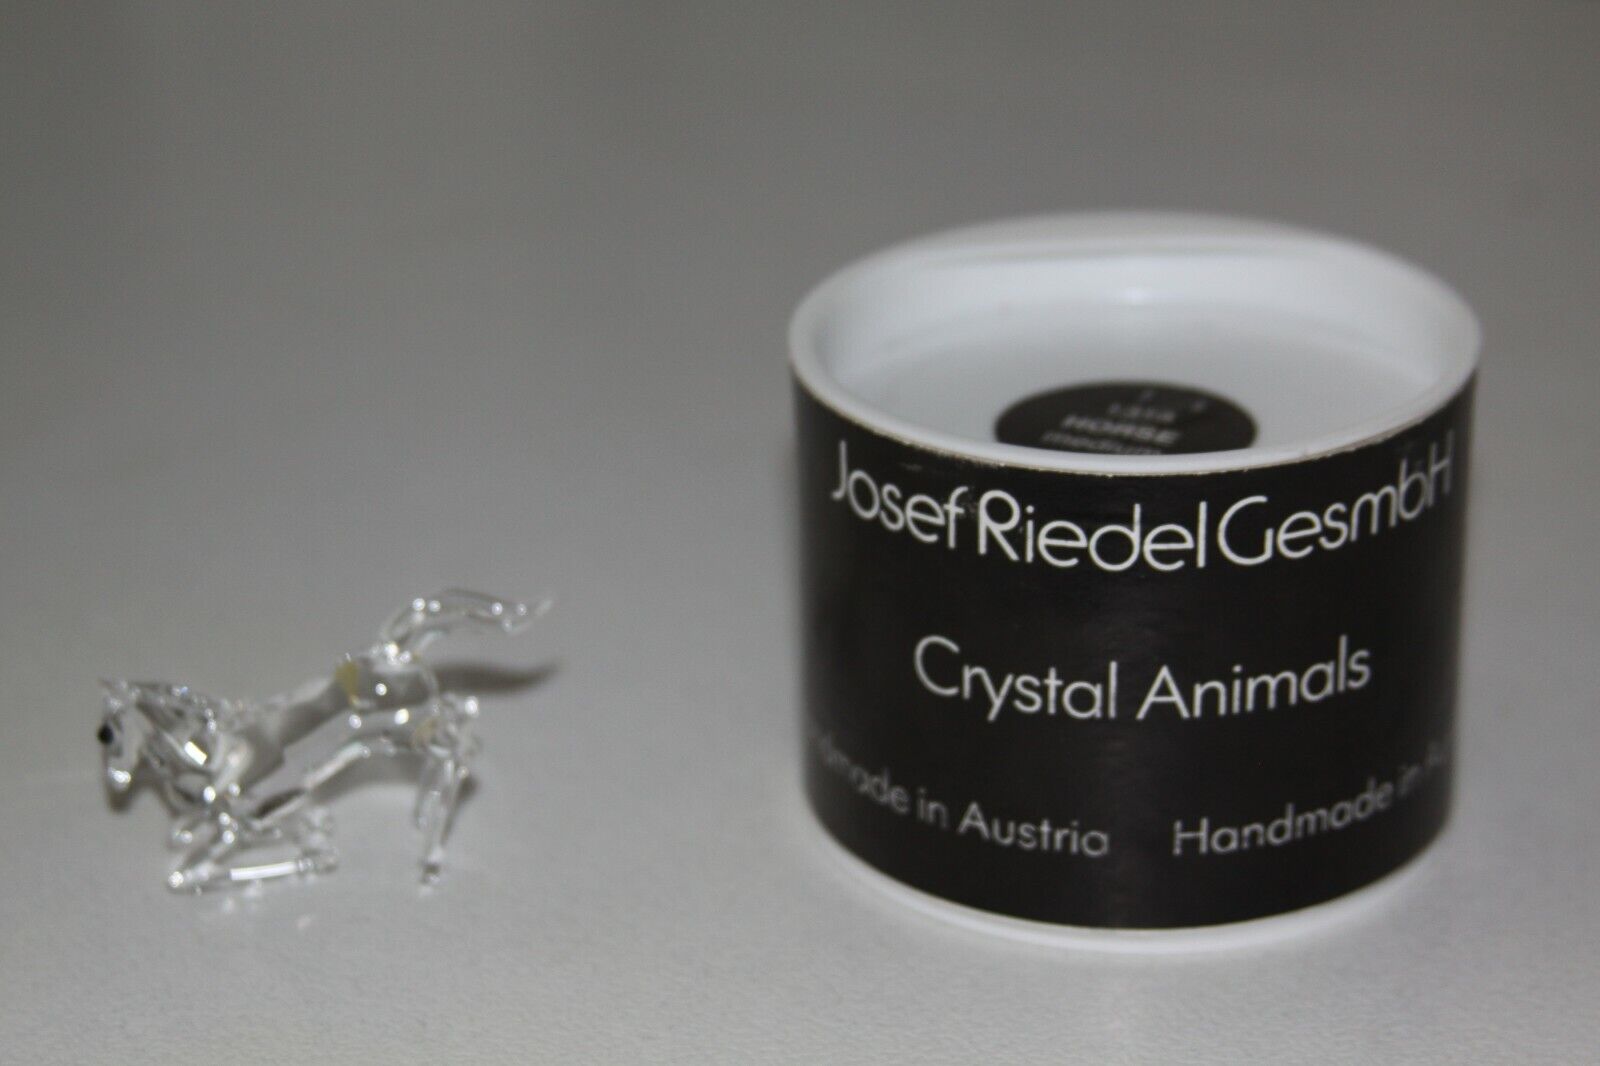 Rare Vintage Josef Riedel Gesmbh Crystal Animals Horse Made In Austria MIB